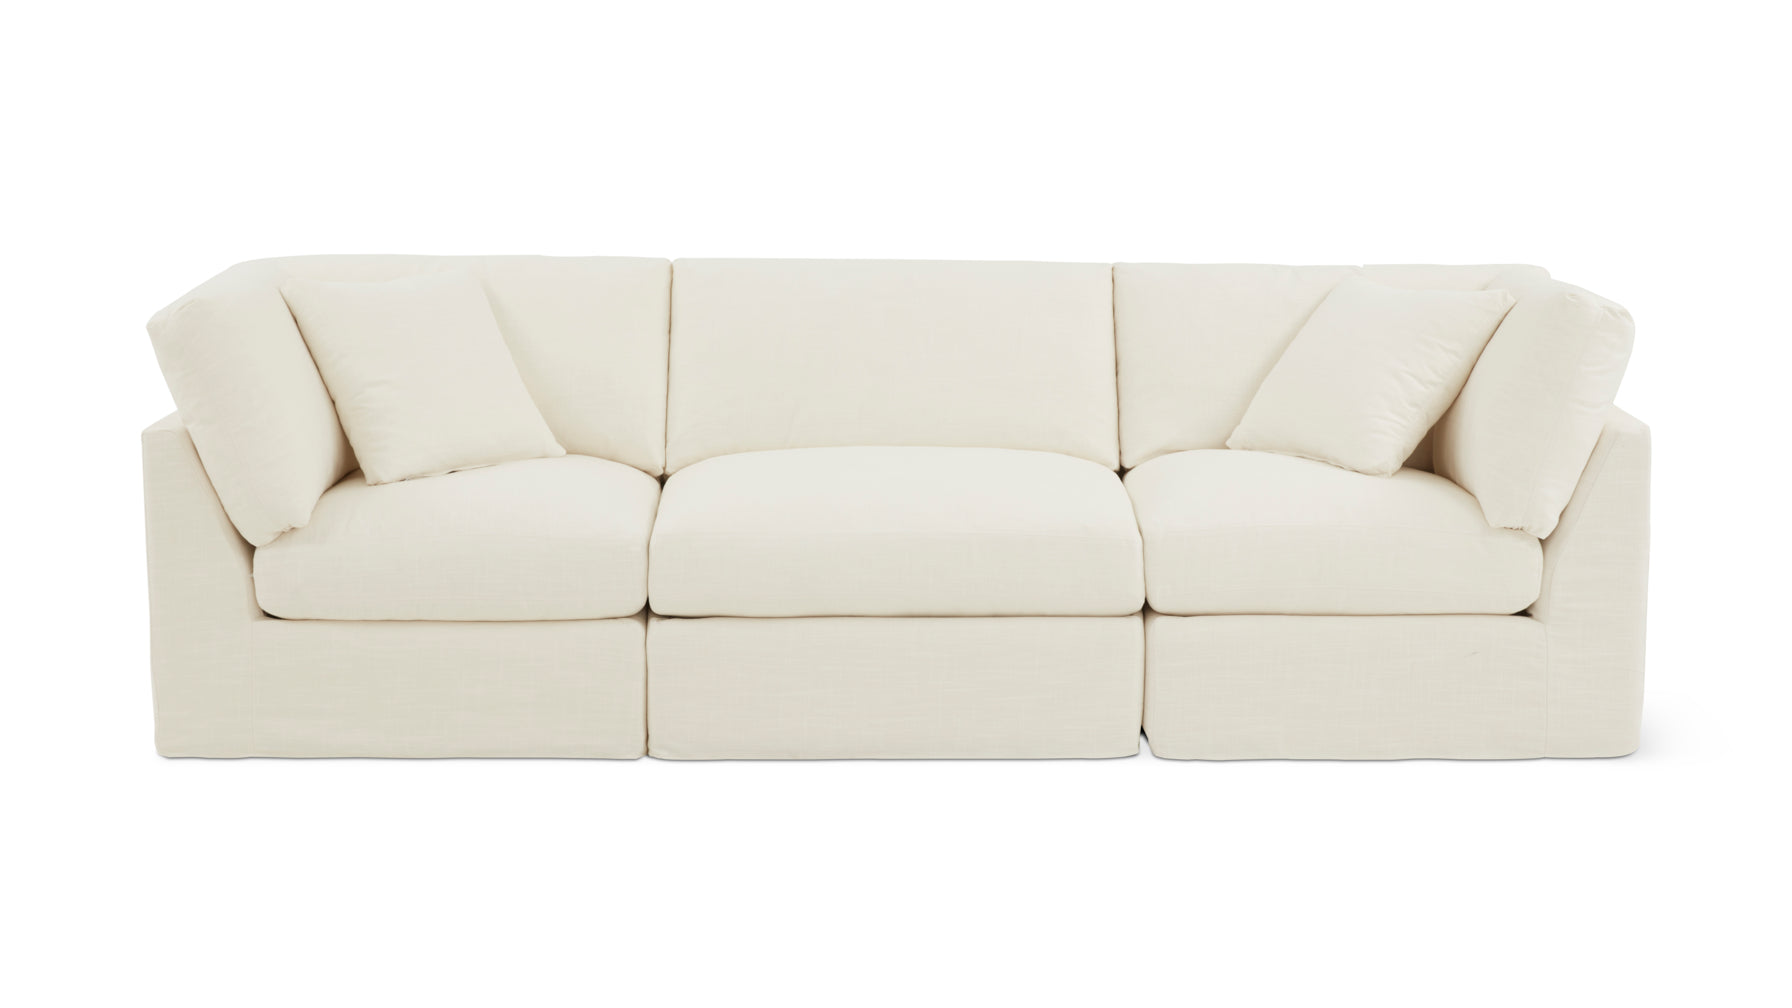 Get Together™ 3-Piece Modular Sofa, Standard, Cream Linen - Image 1